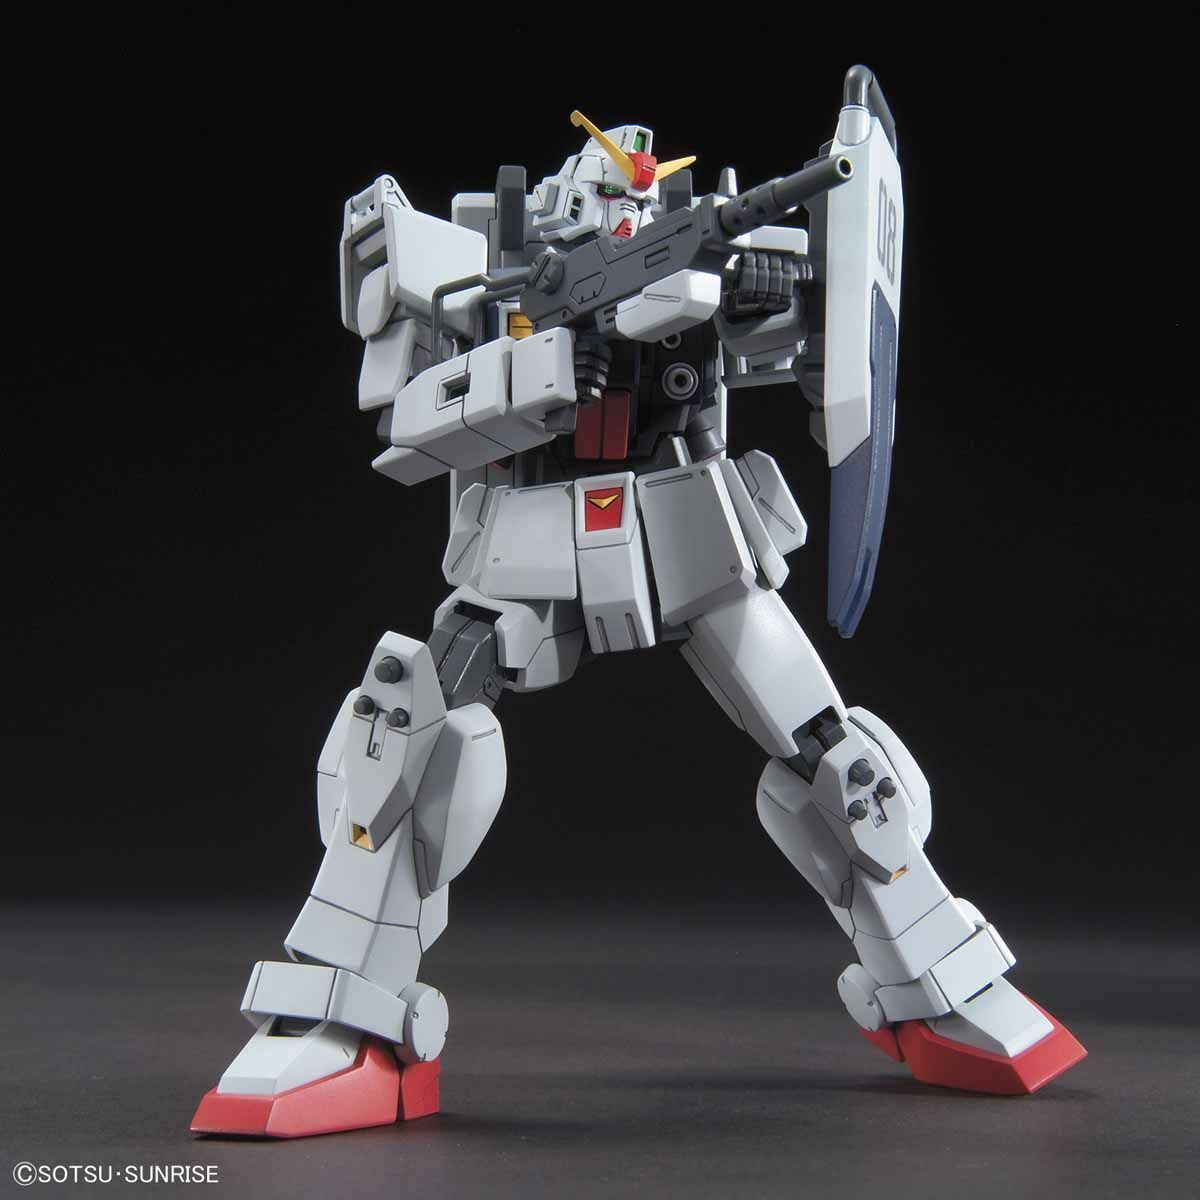 Hg 1/144 RX-79 (G) Gundam Ground Type